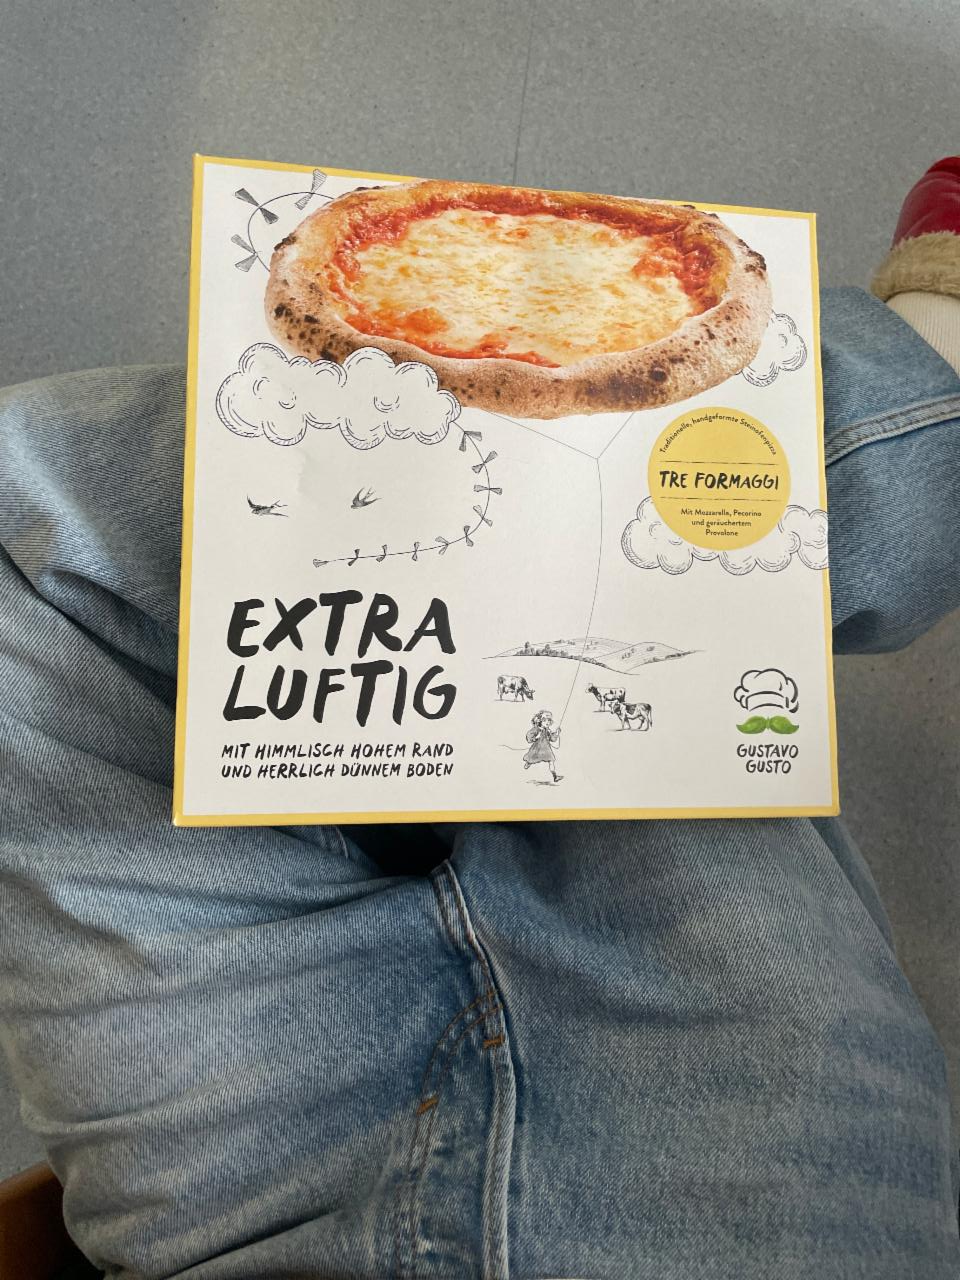 Фото - Pizza luft und liebe extra luftig tre formaggi Gustavo Gusto